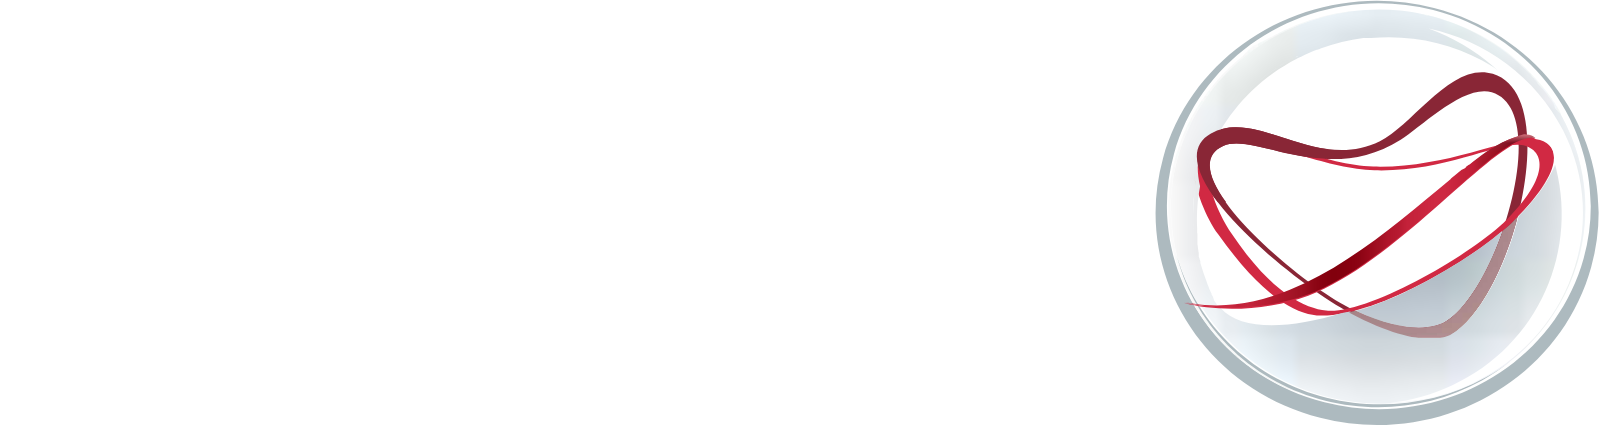 Anima Holding logo large for dark backgrounds (transparent PNG)